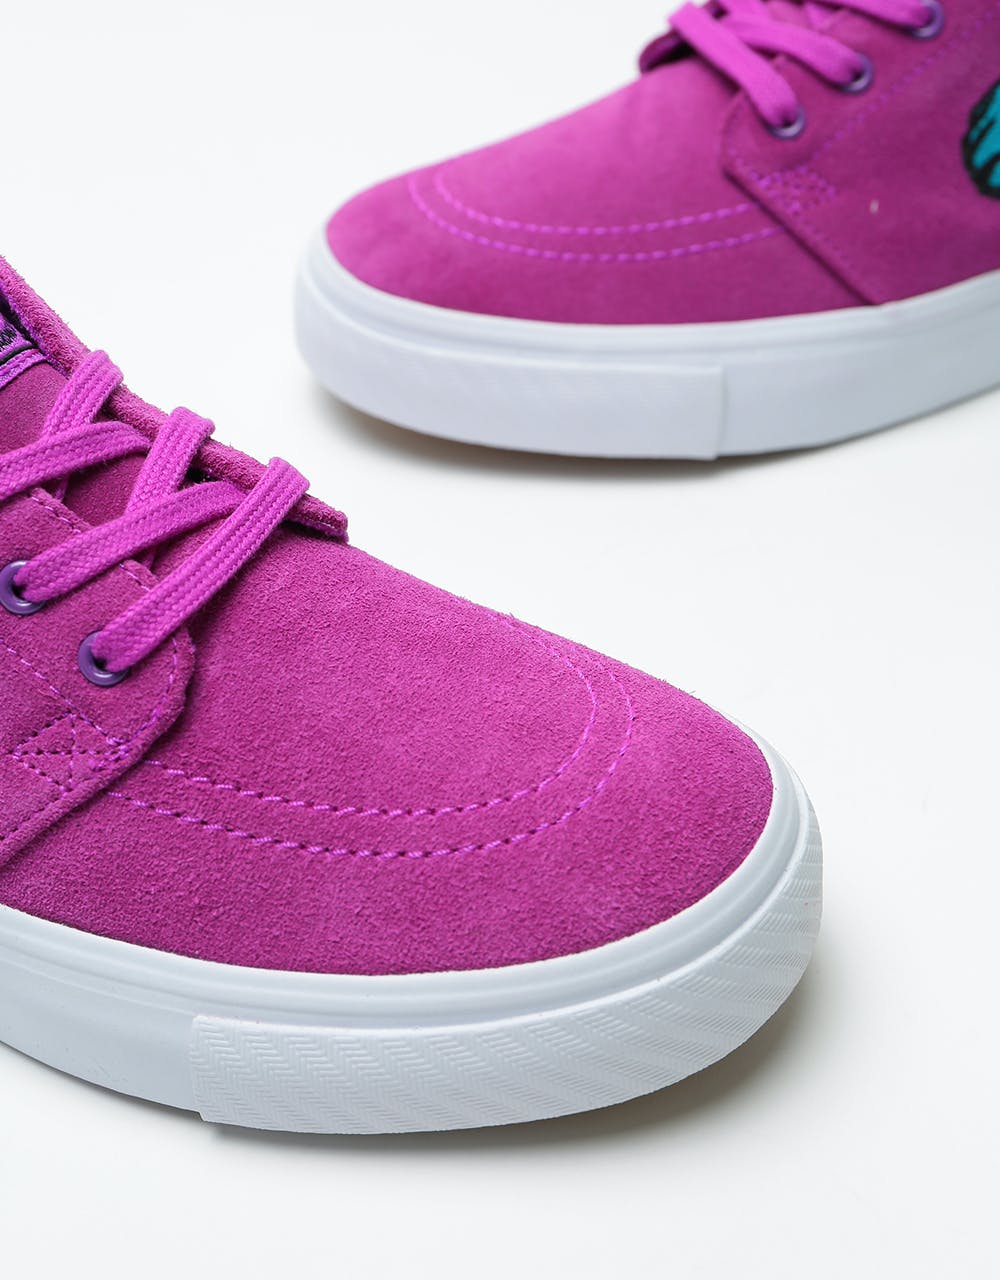 Nike SB Stefan Janoski Kids Skate Shoes - Vivid Purple/Laser Blue/Gum